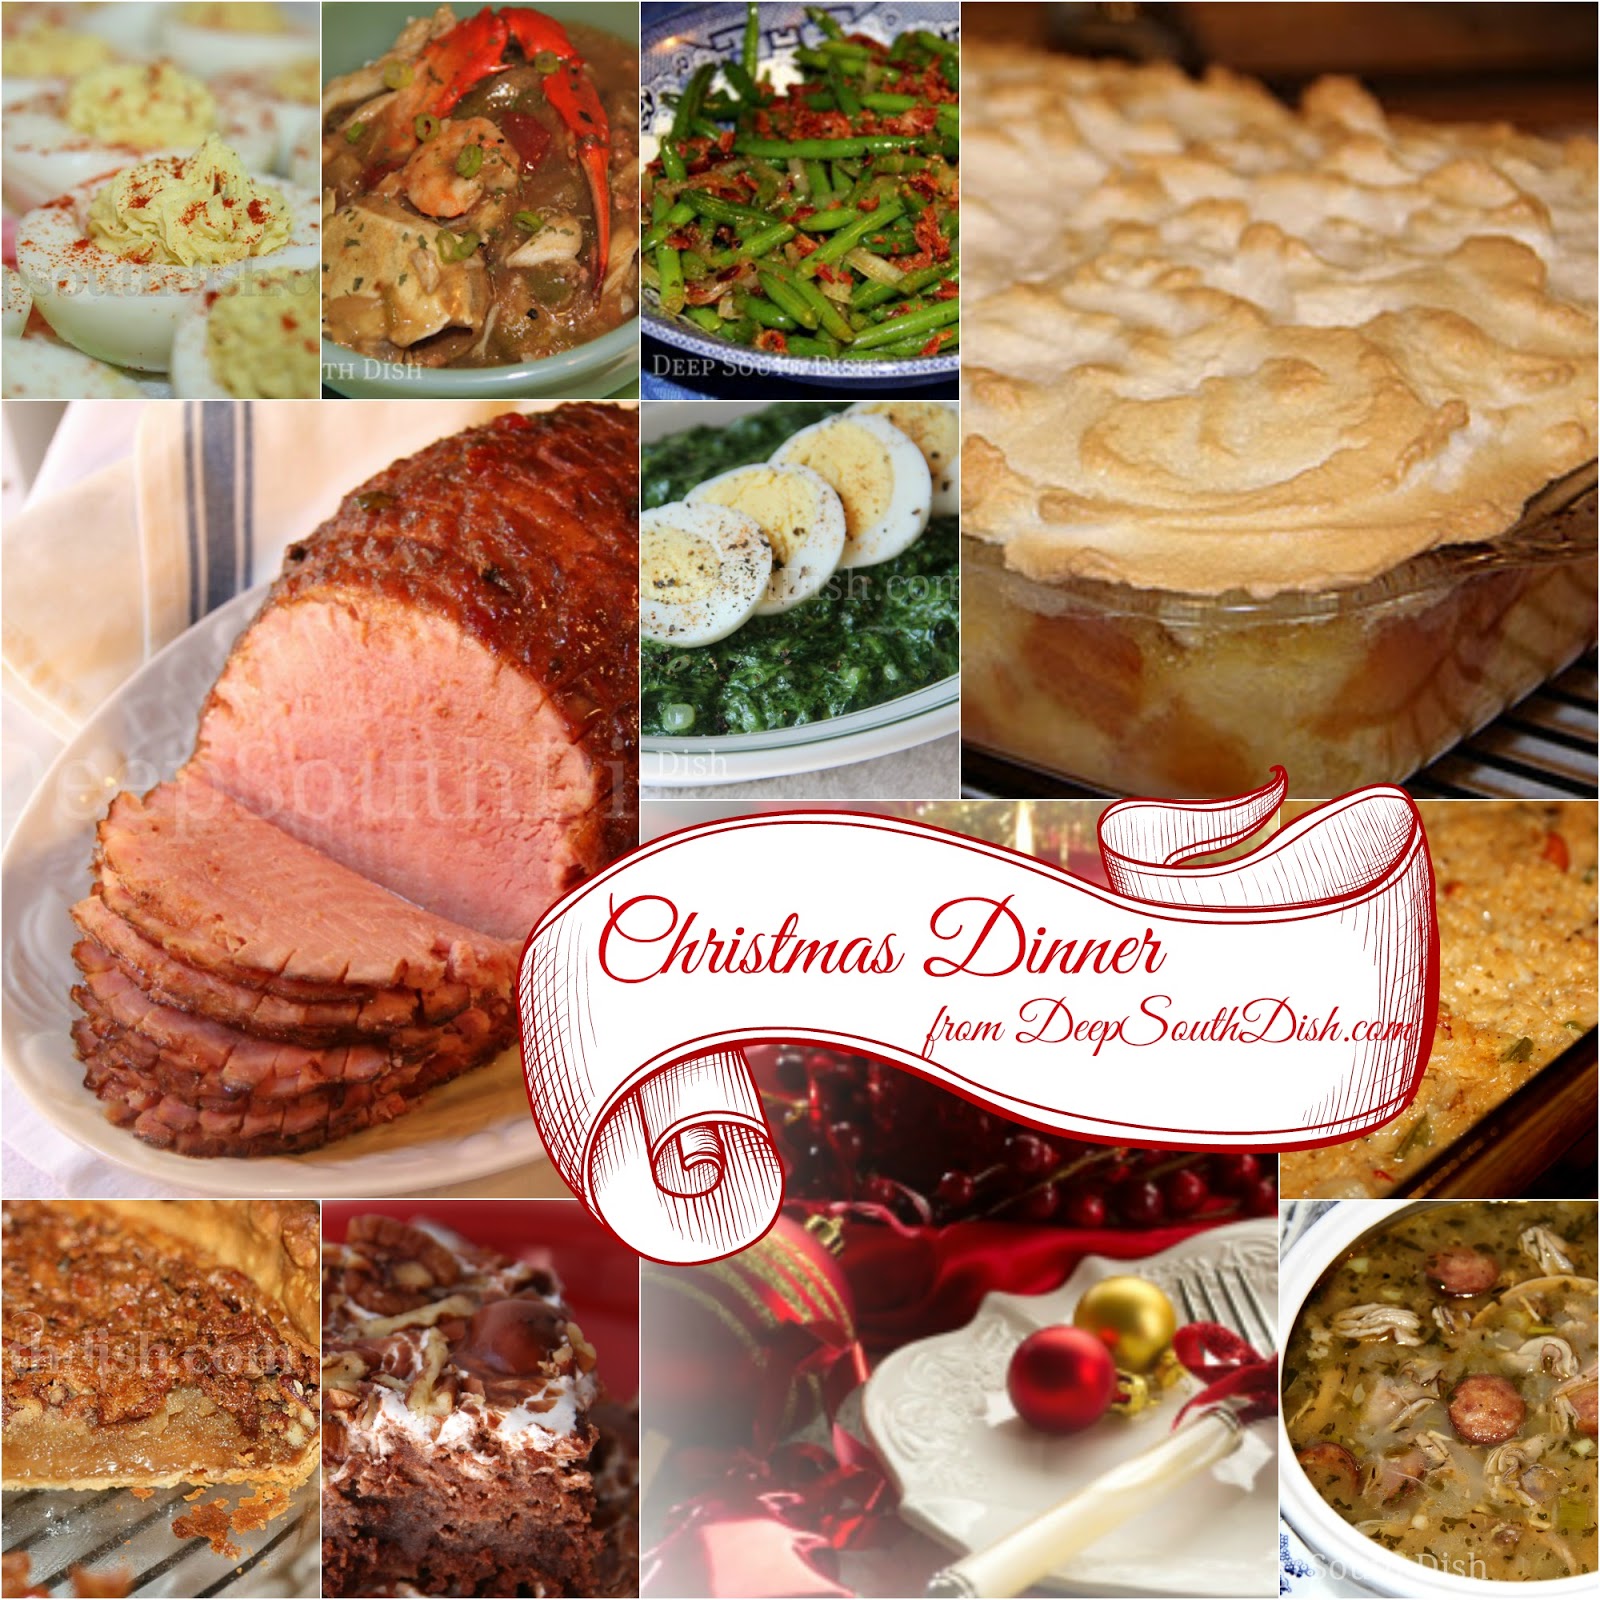 Deep South Dish: Southern Christmas Dinner Menu and Recipe ...